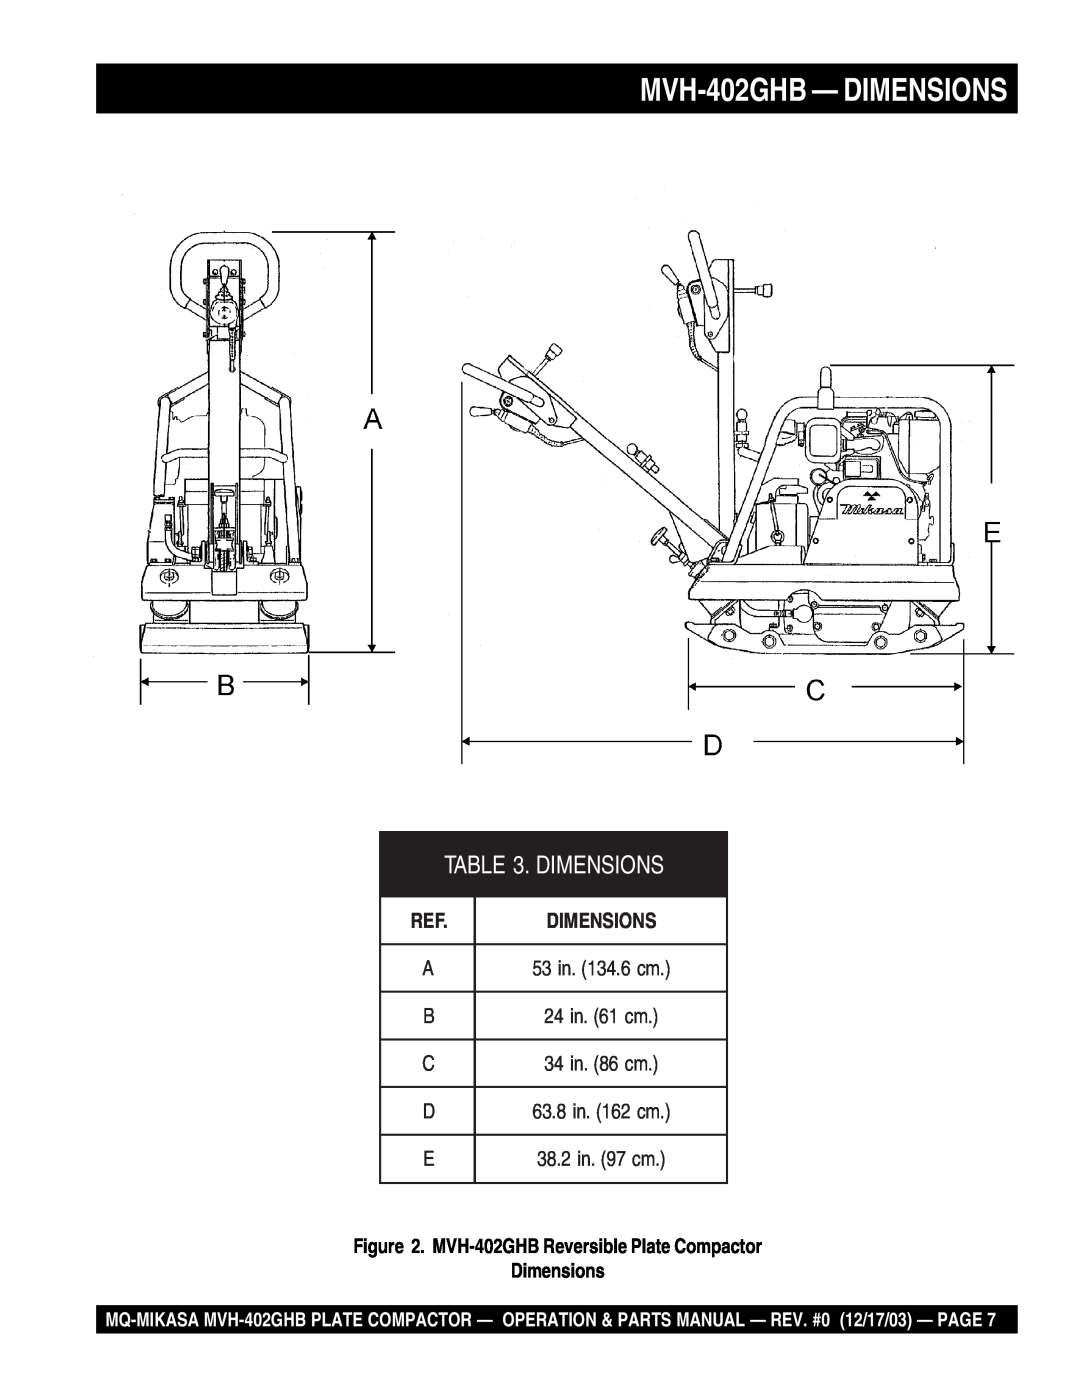 Multiquip manual MVH-402GHB- DIMENSIONS, Dimensions, MVH-402GHBReversible Plate Compactor 